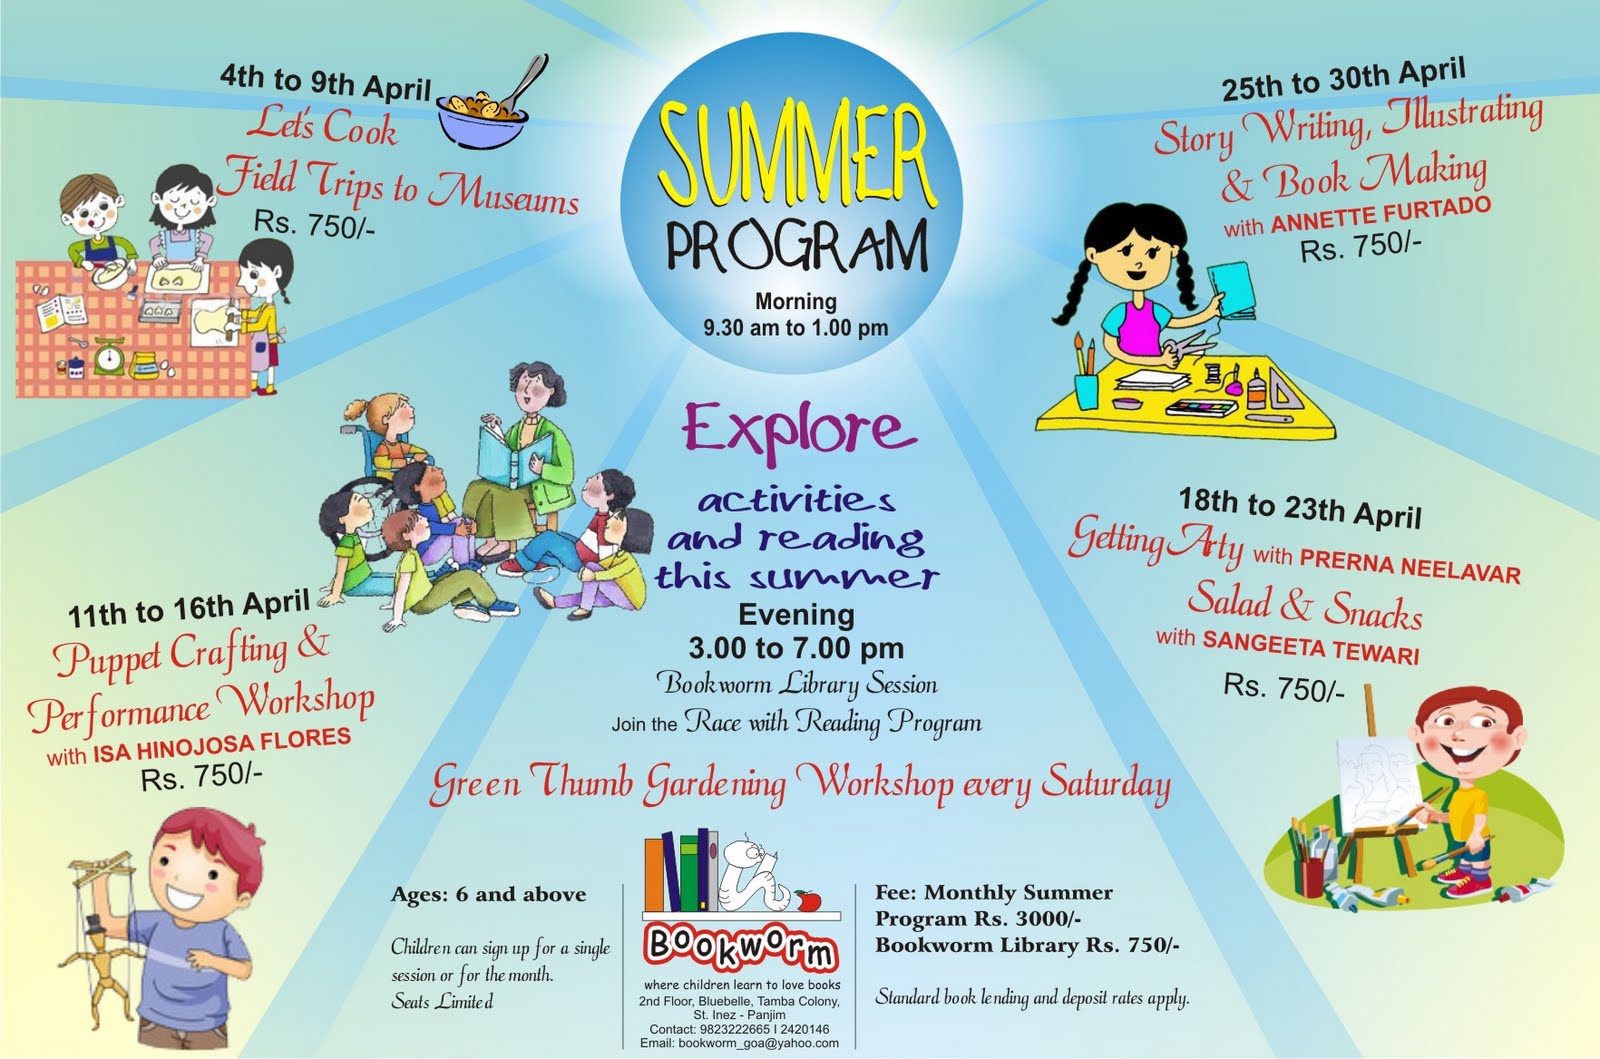 Pratham Books: Events and Workshops